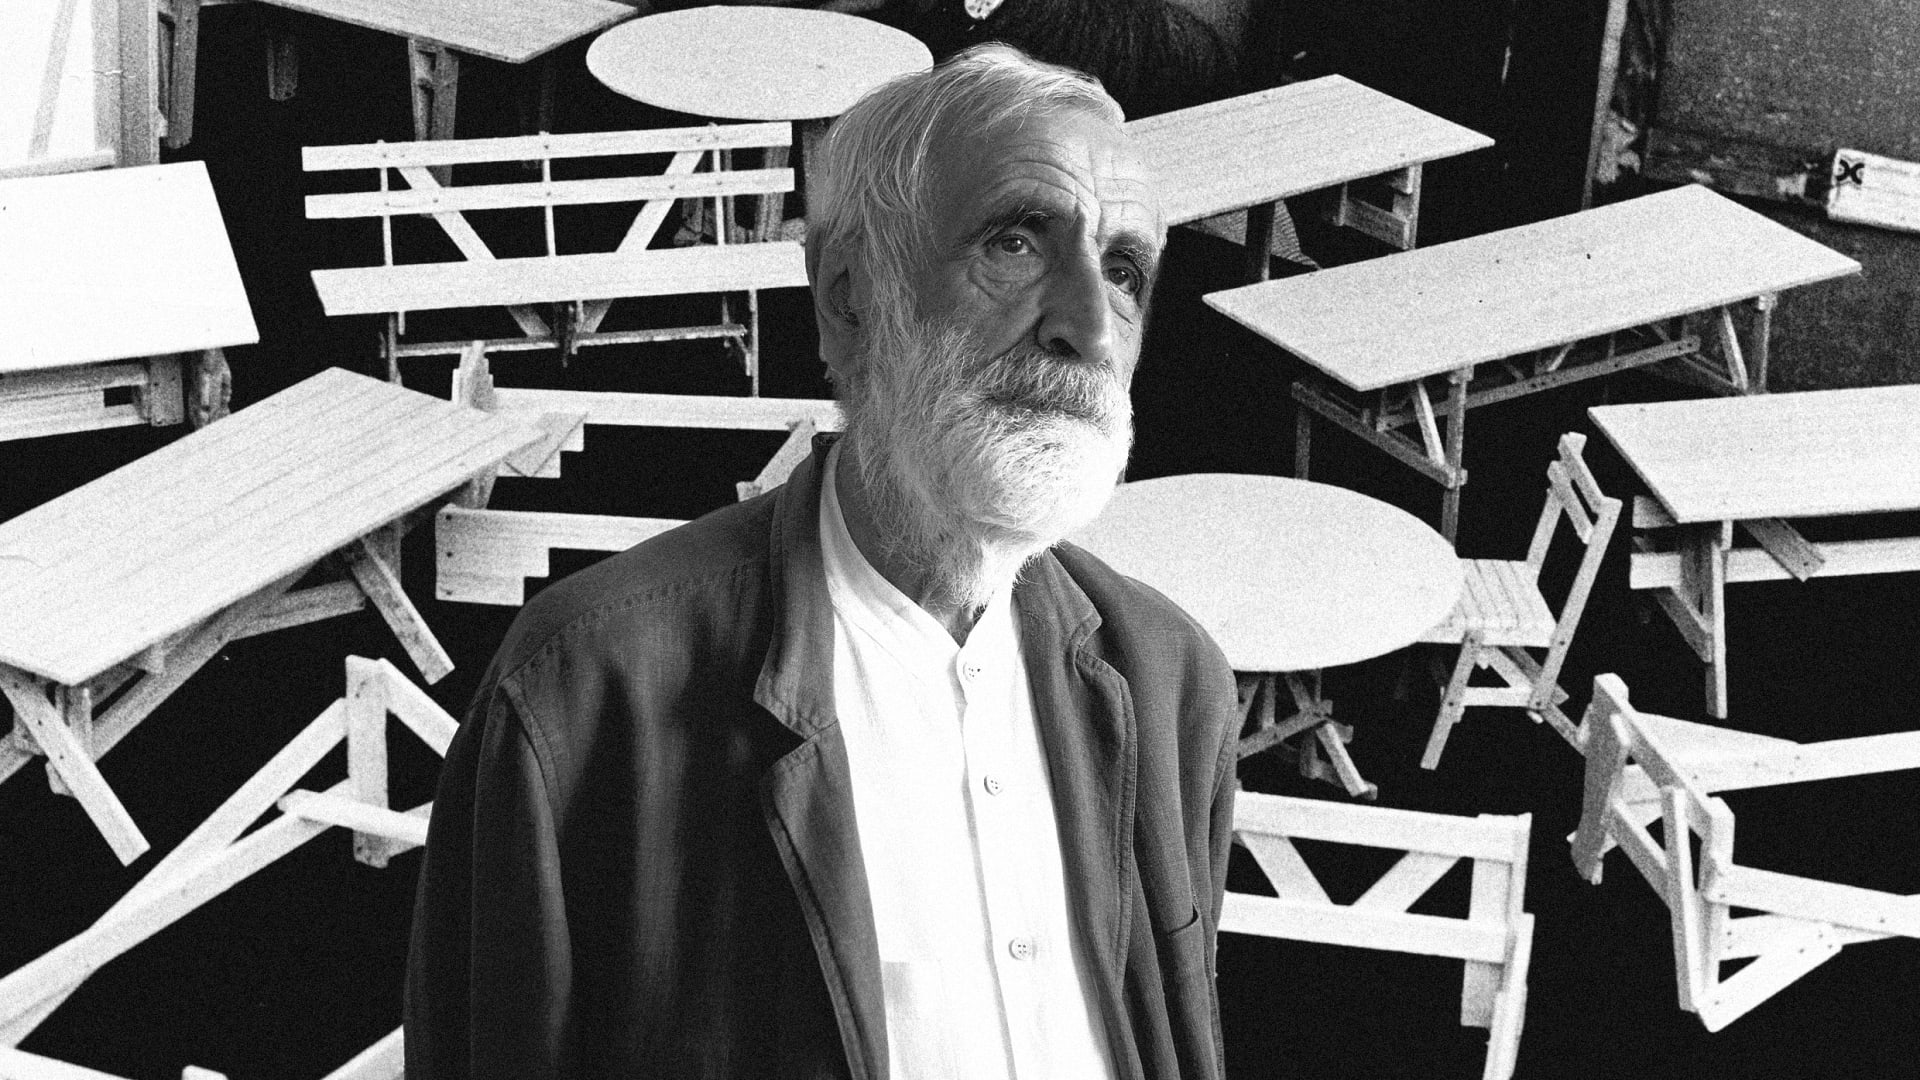 Remembering design legend Enzo Mari, the forefather of DIY furniture